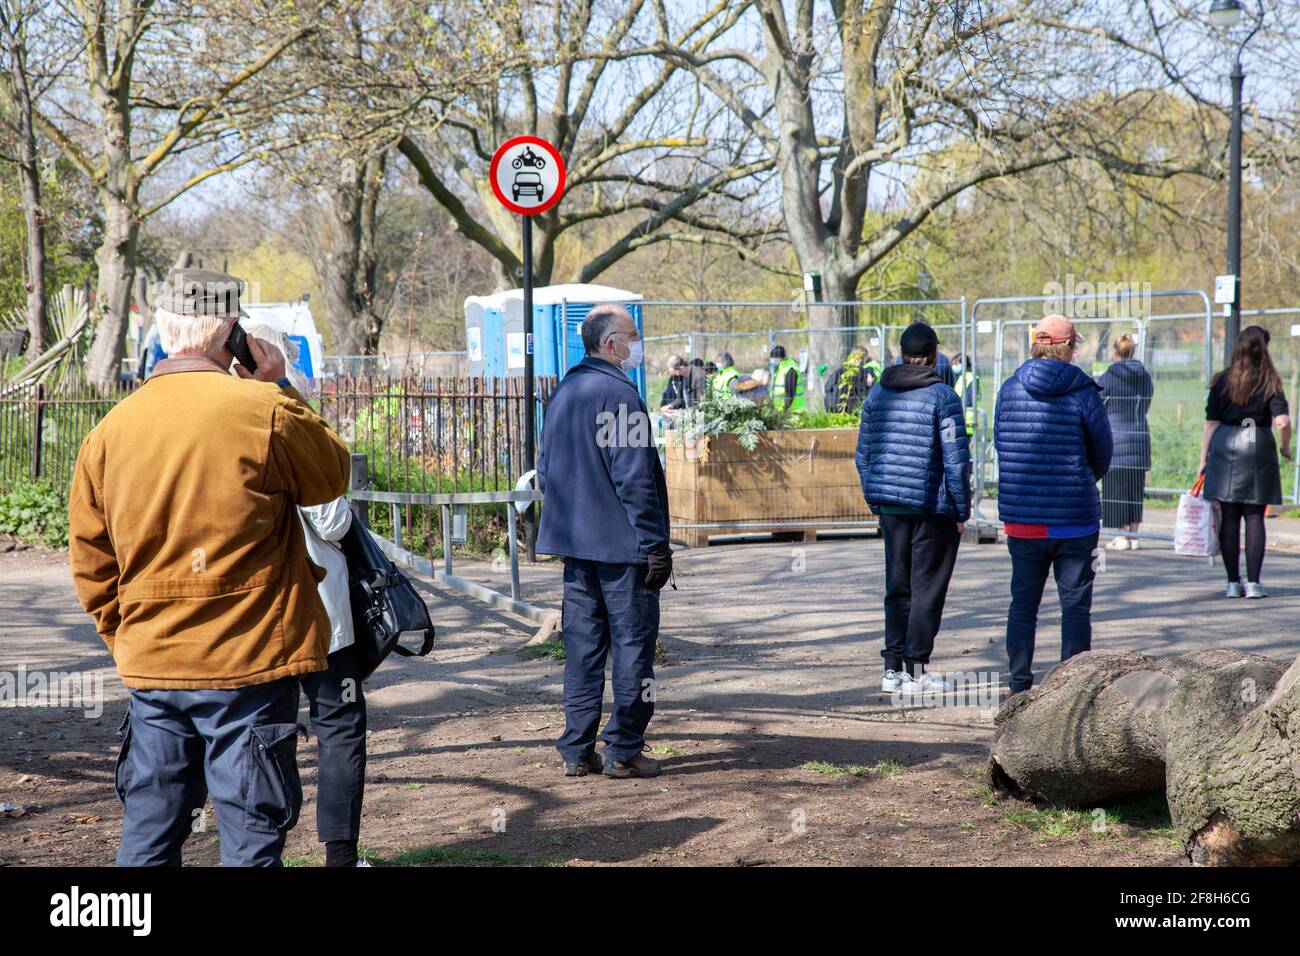 People Queue for Surge Testing Coronavirus on Clapham Common, London Uk - 14 April 2021 Stock Photo